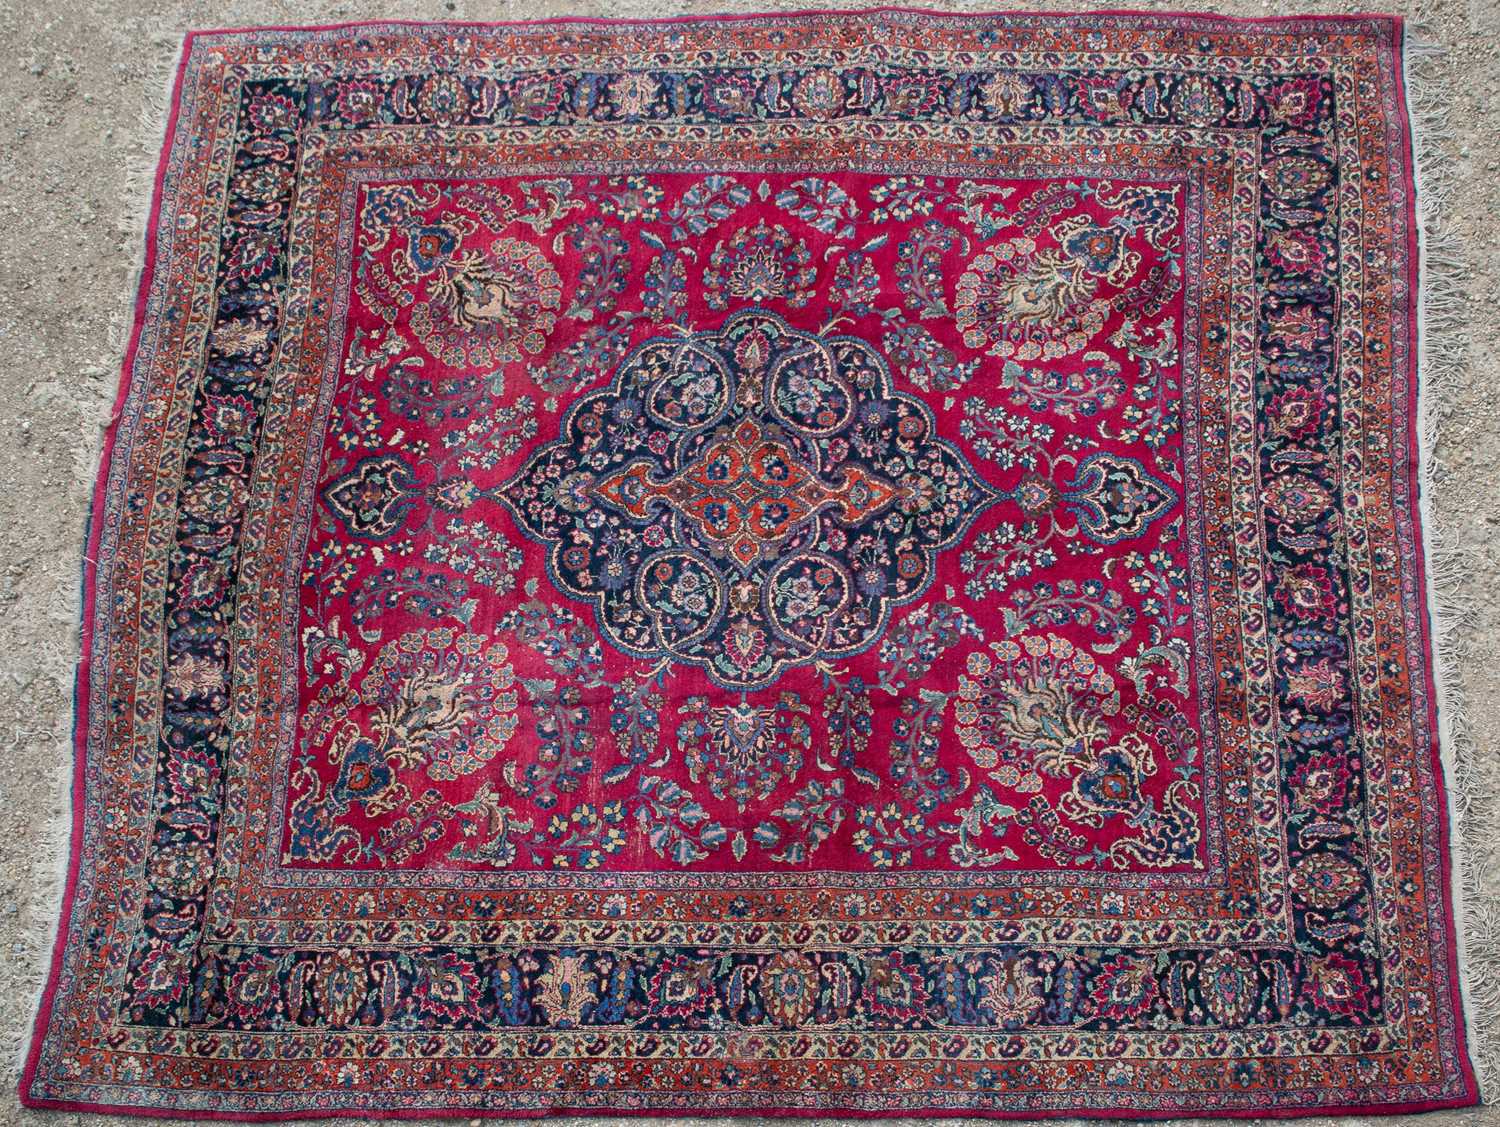 A modern Kashan rug